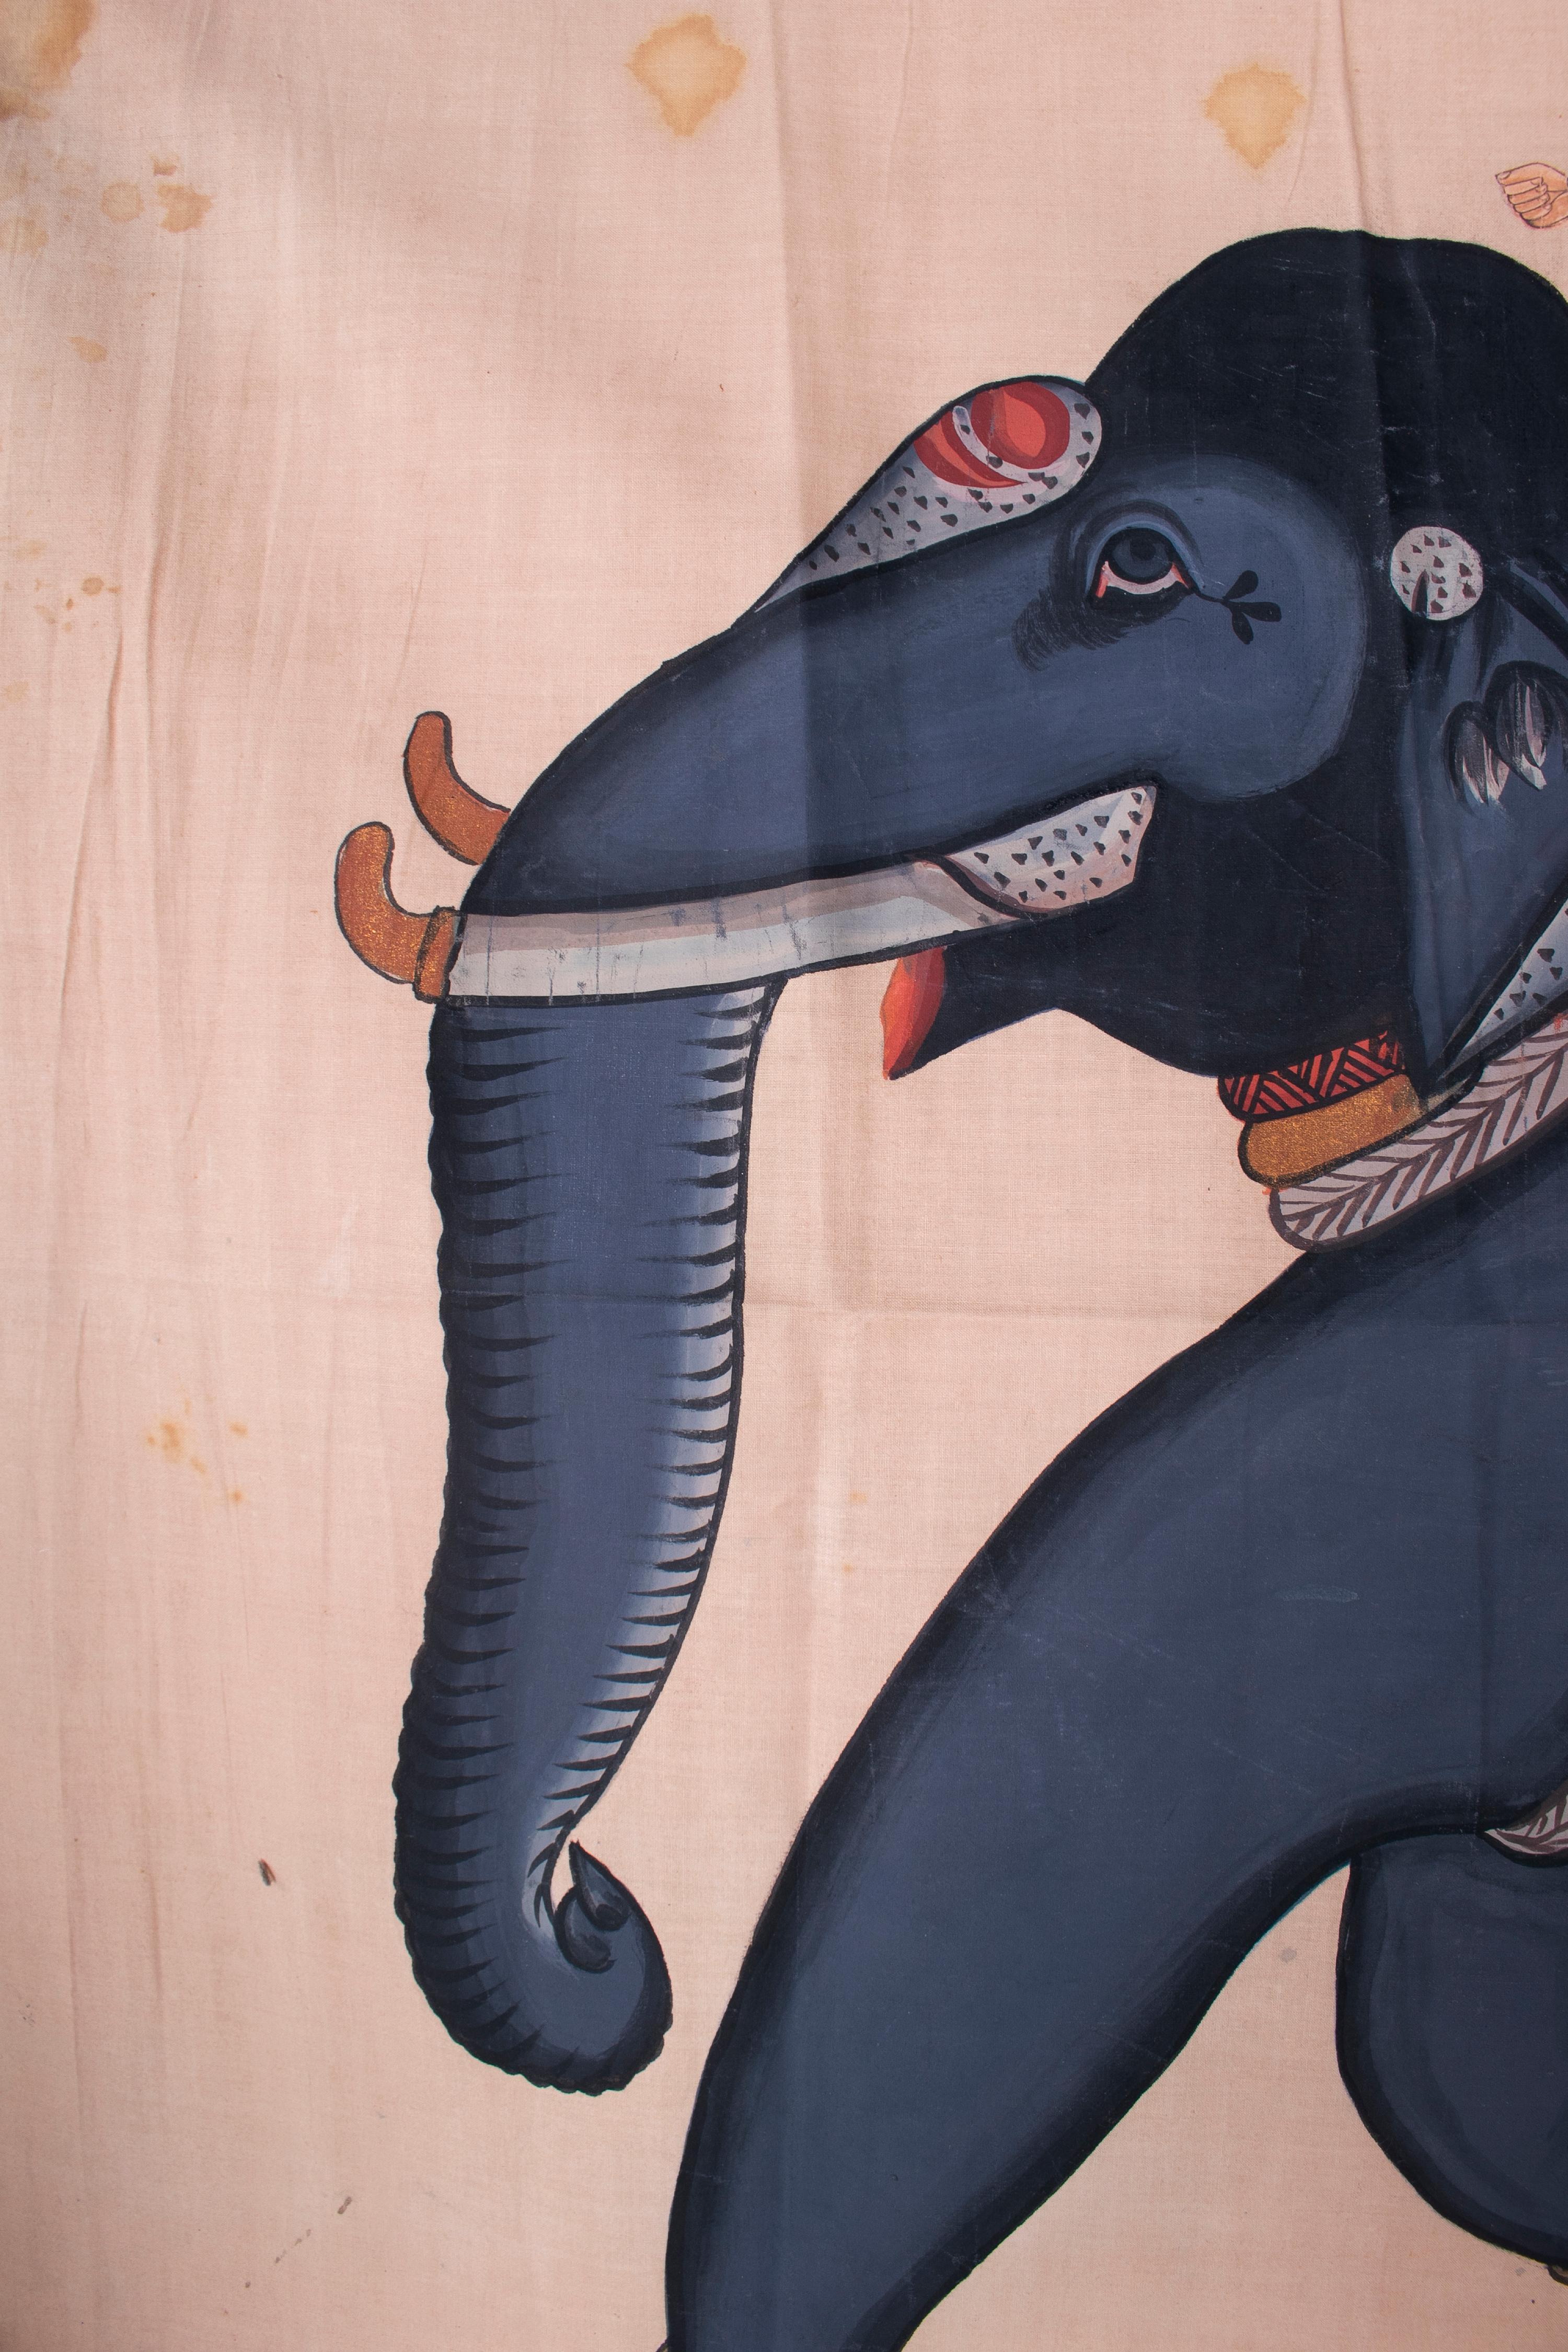 1970s Jaime Parlade designer hand drawn elephant on canvas.